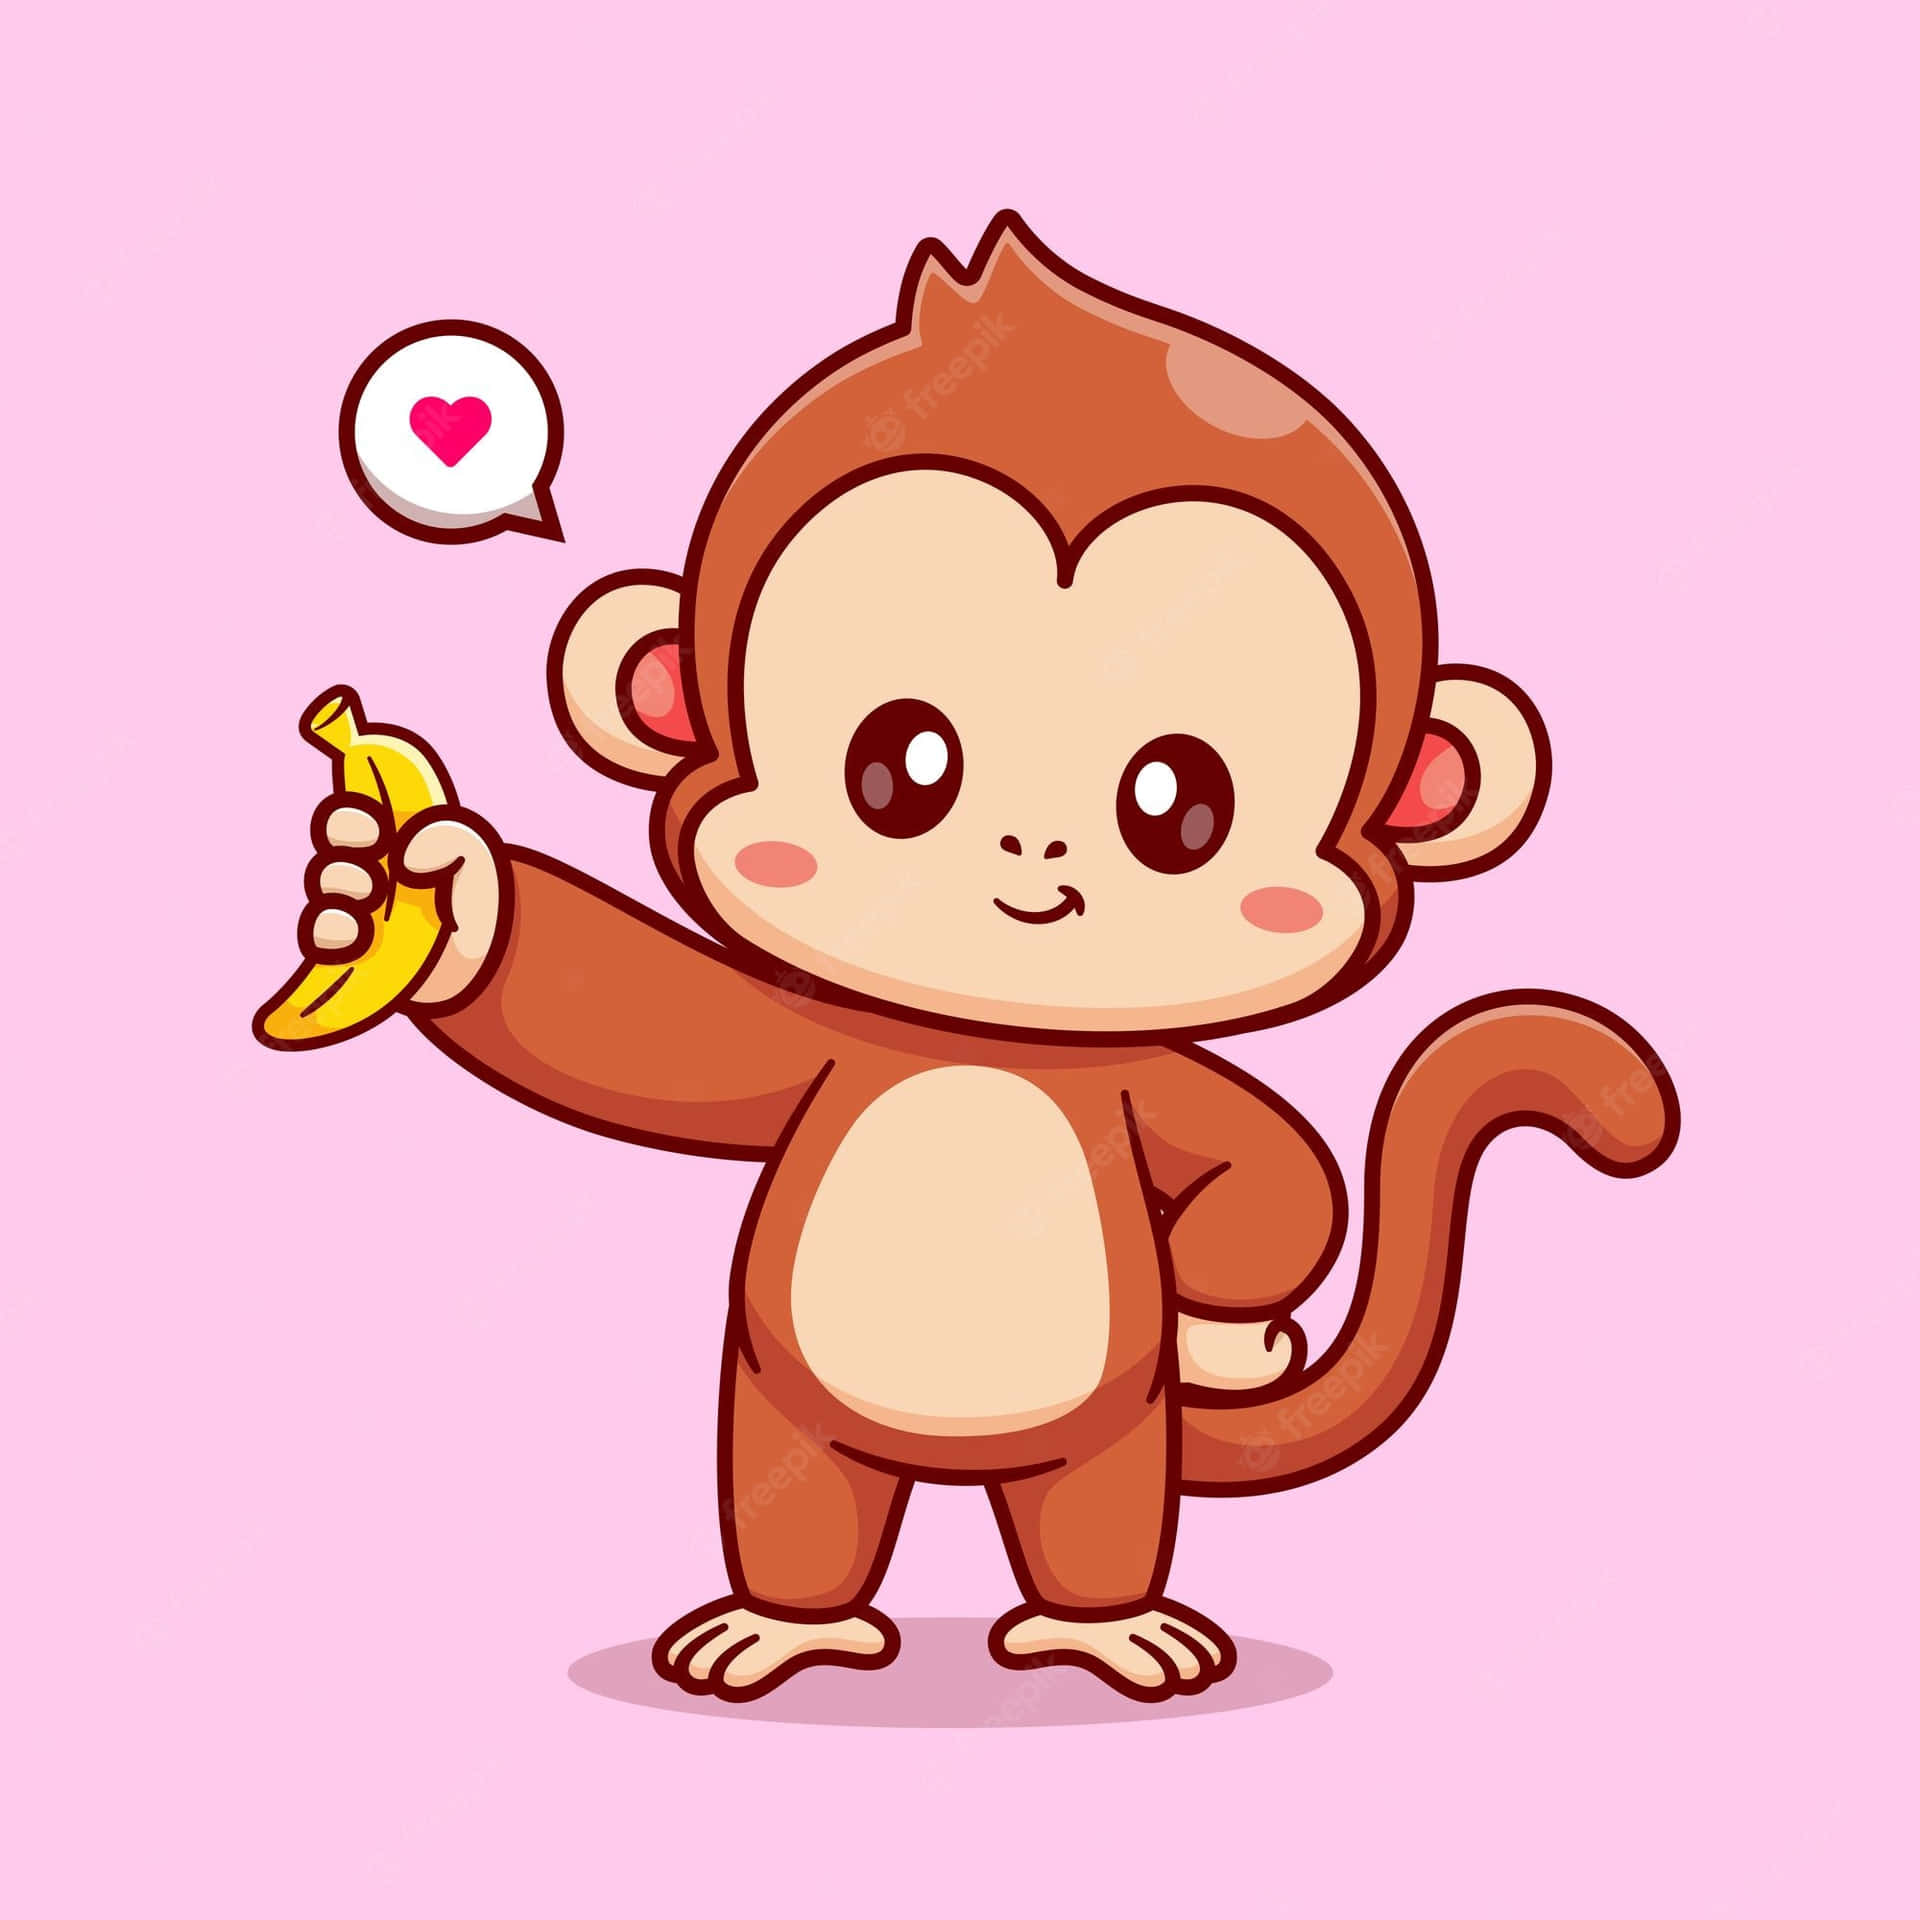 Cute Monkey Images - Free Download on Freepik